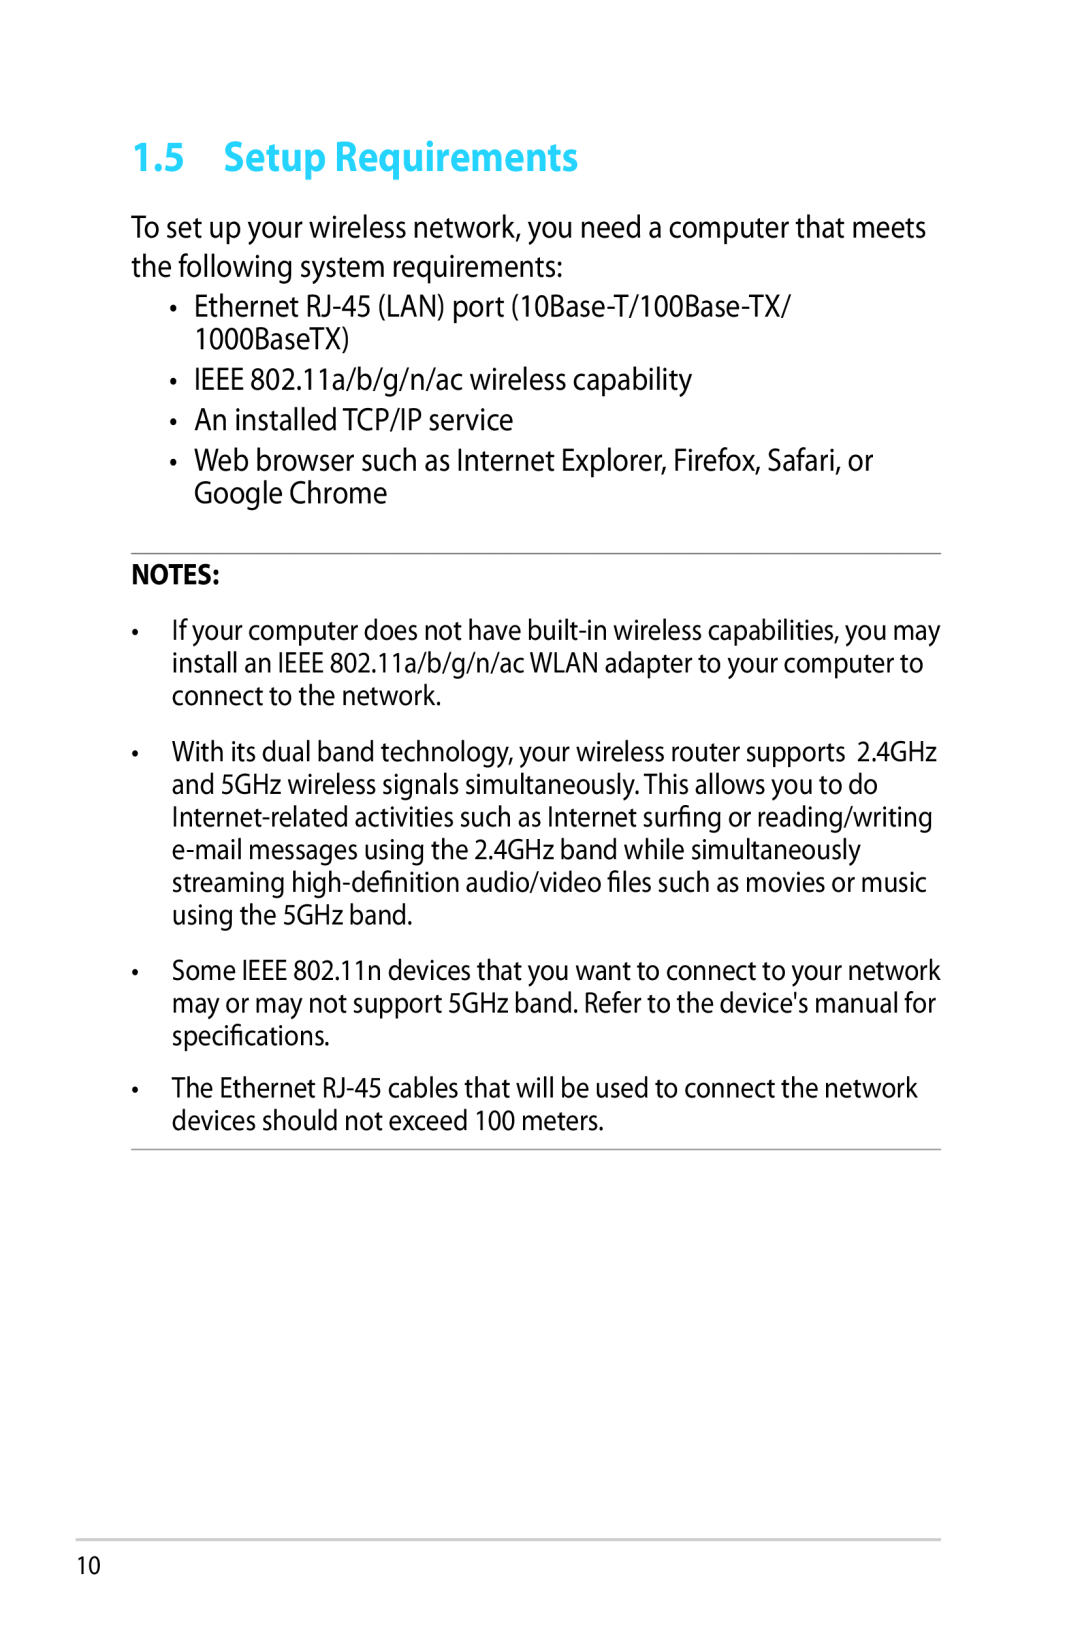 Asus RTAC68U manual Setup Requirements, Ethernet RJ-45 LAN port 10Base-T/100Base-TX/ 1000BaseTX 